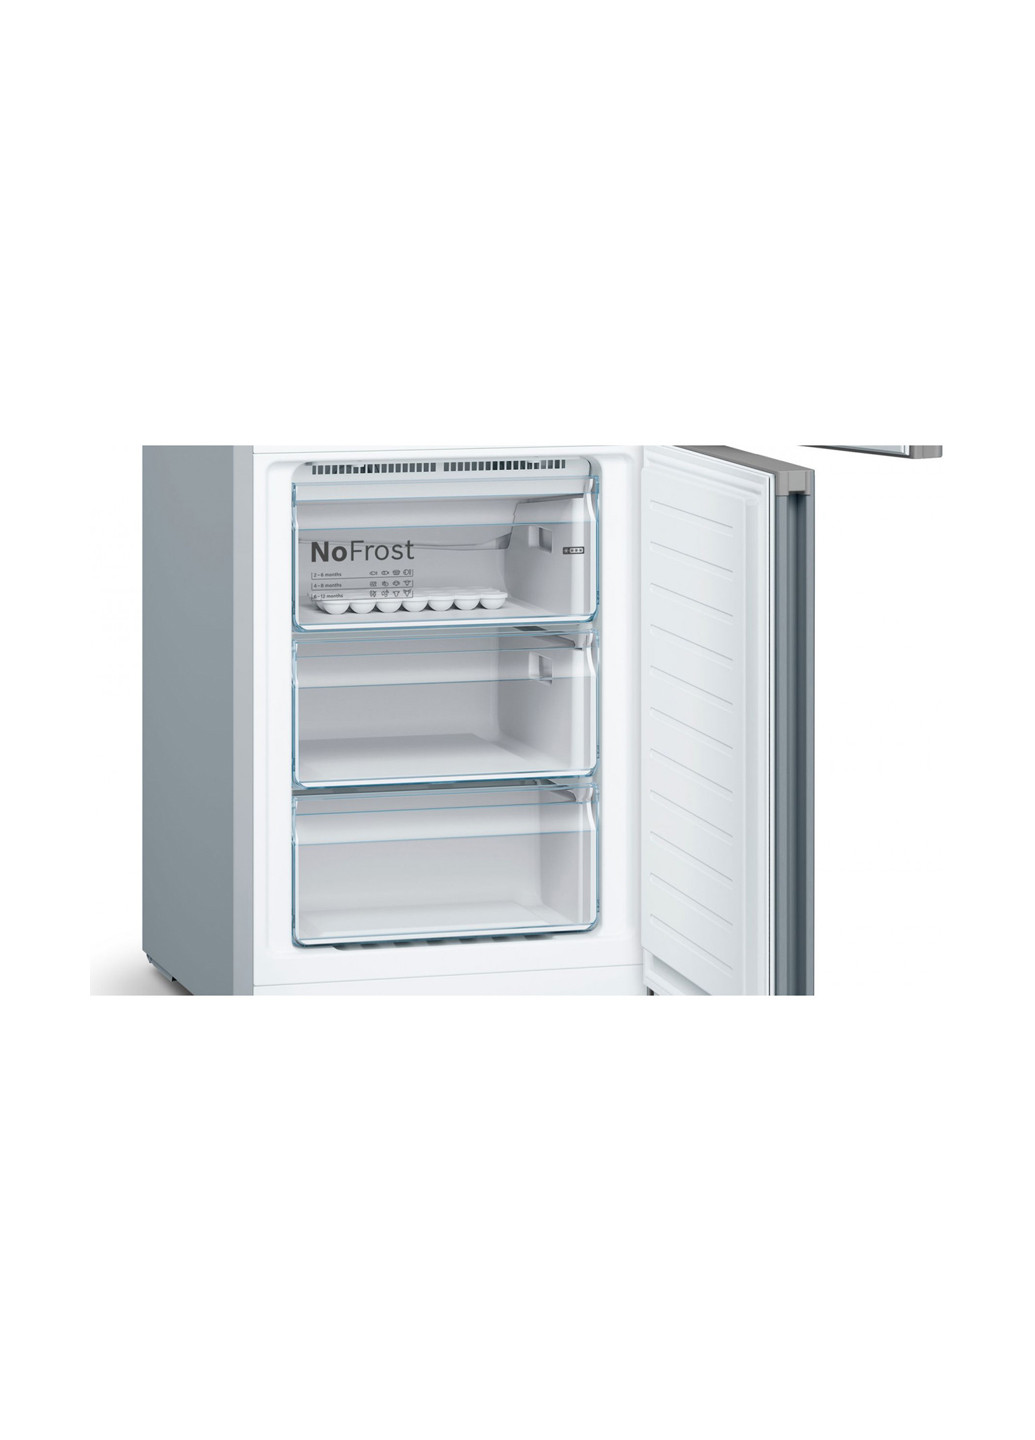 Холодильник Bosch kgn39xl306 (136452145)